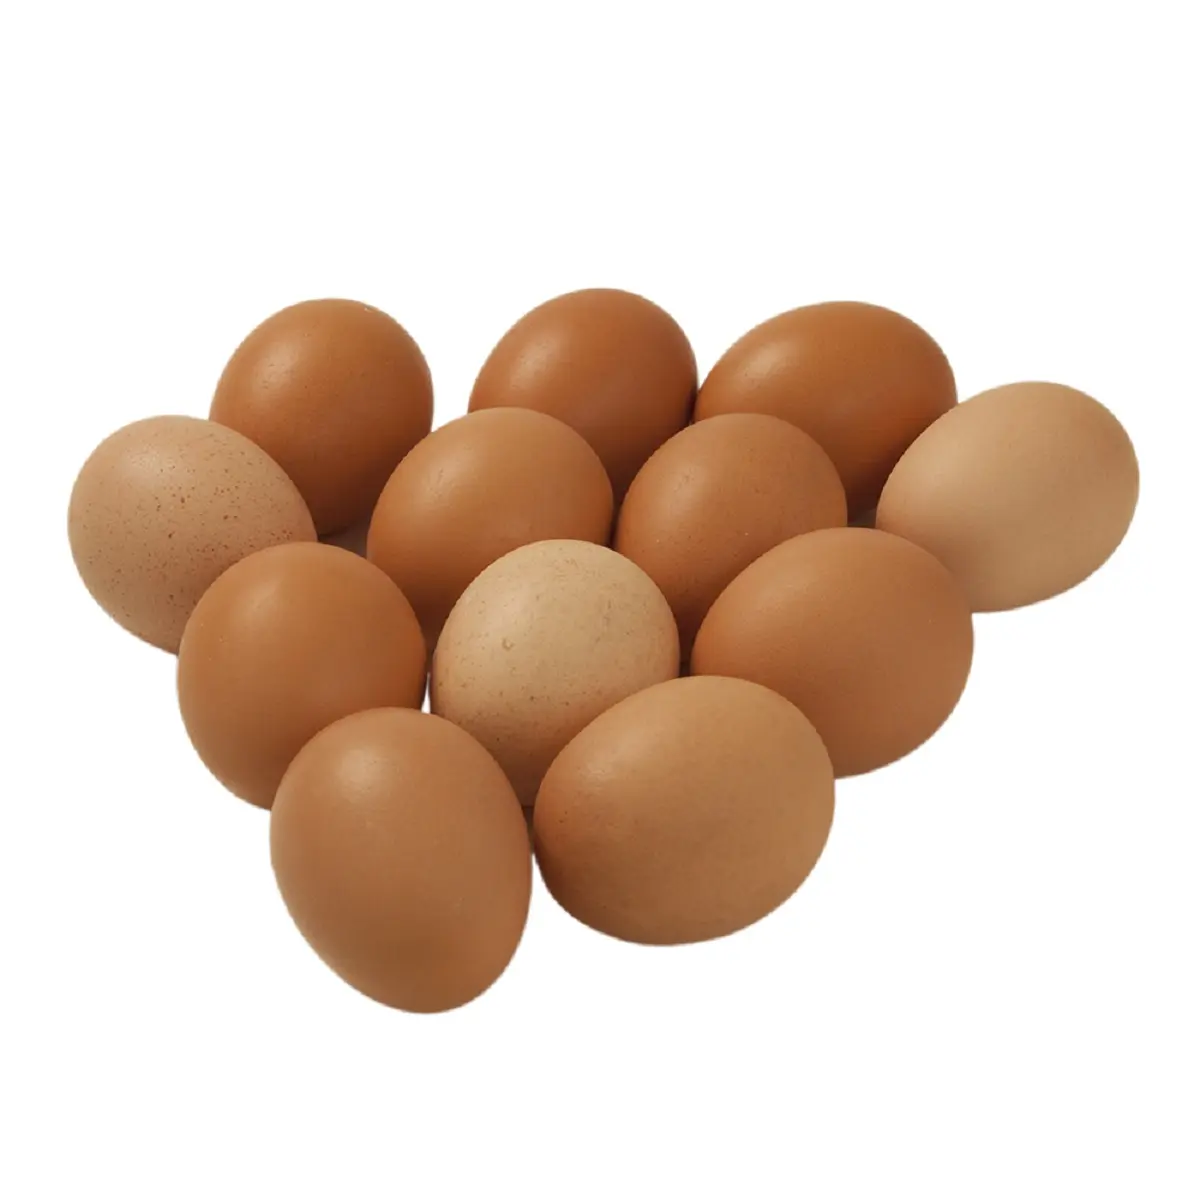 Toplu tedarik organik beyaz taze tavuk yumurta/taze tavuk-